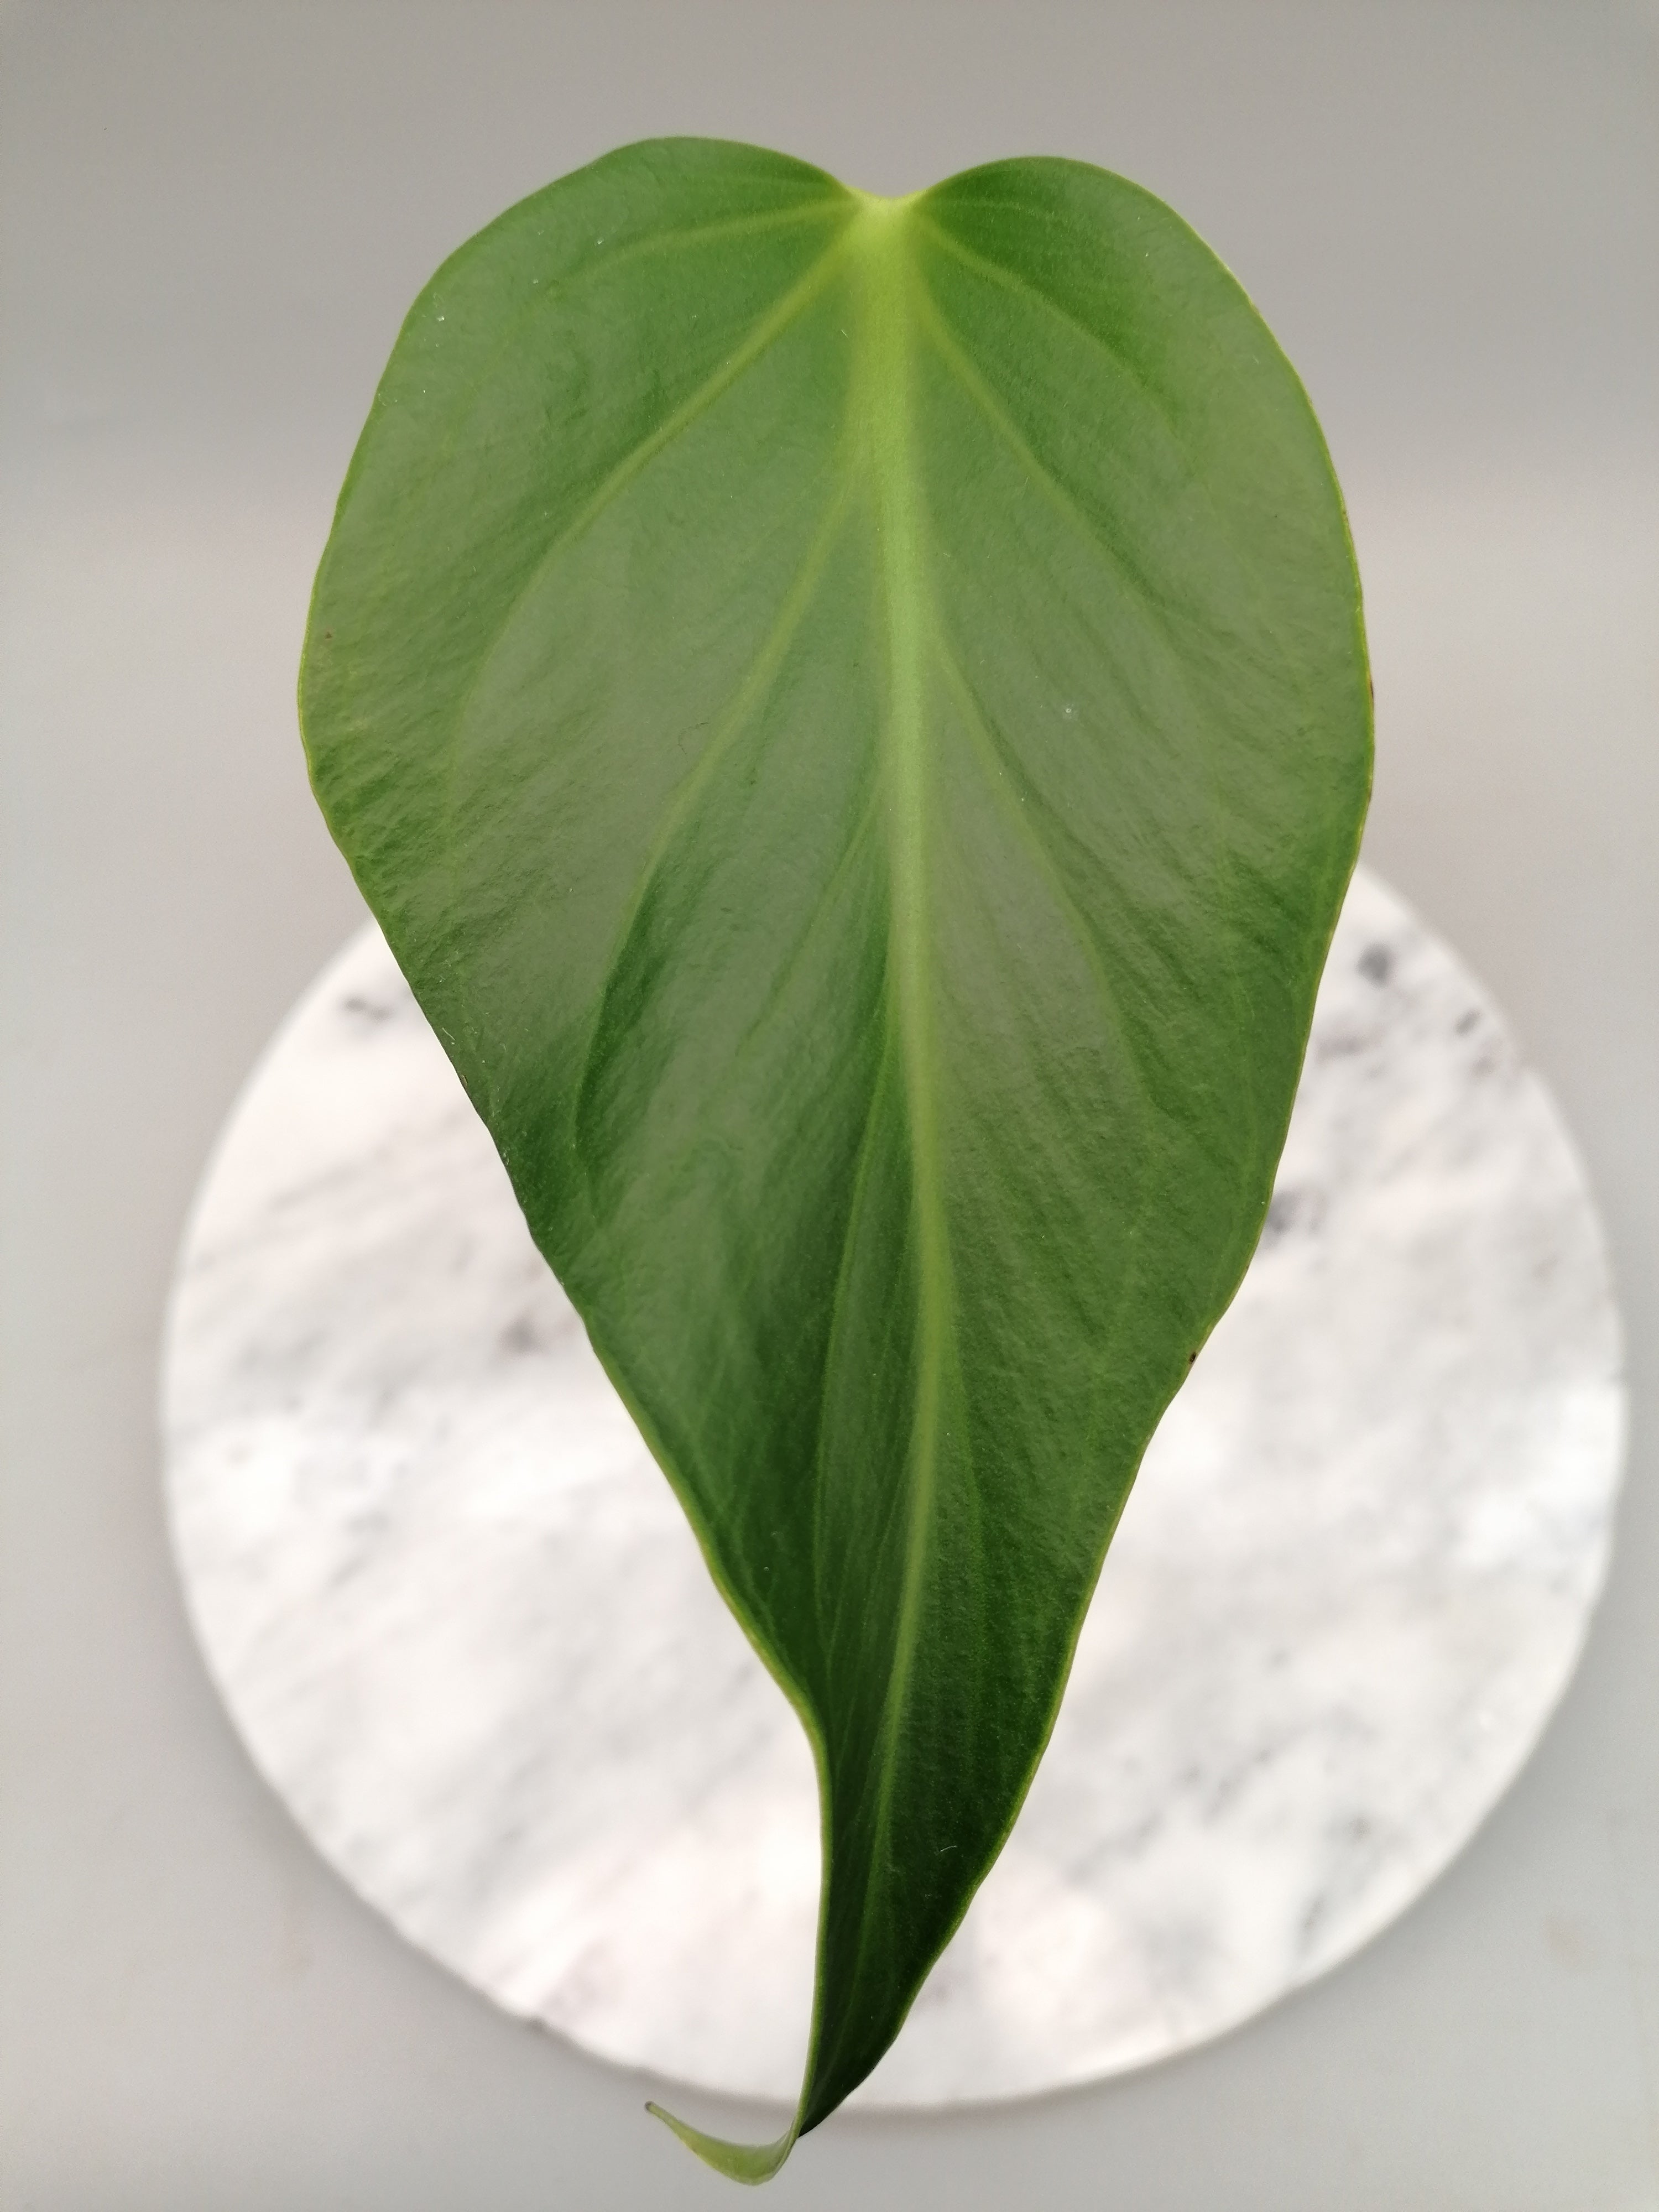 Monstera 'Burle Marx Flame' 1 Leaf (Cutting)